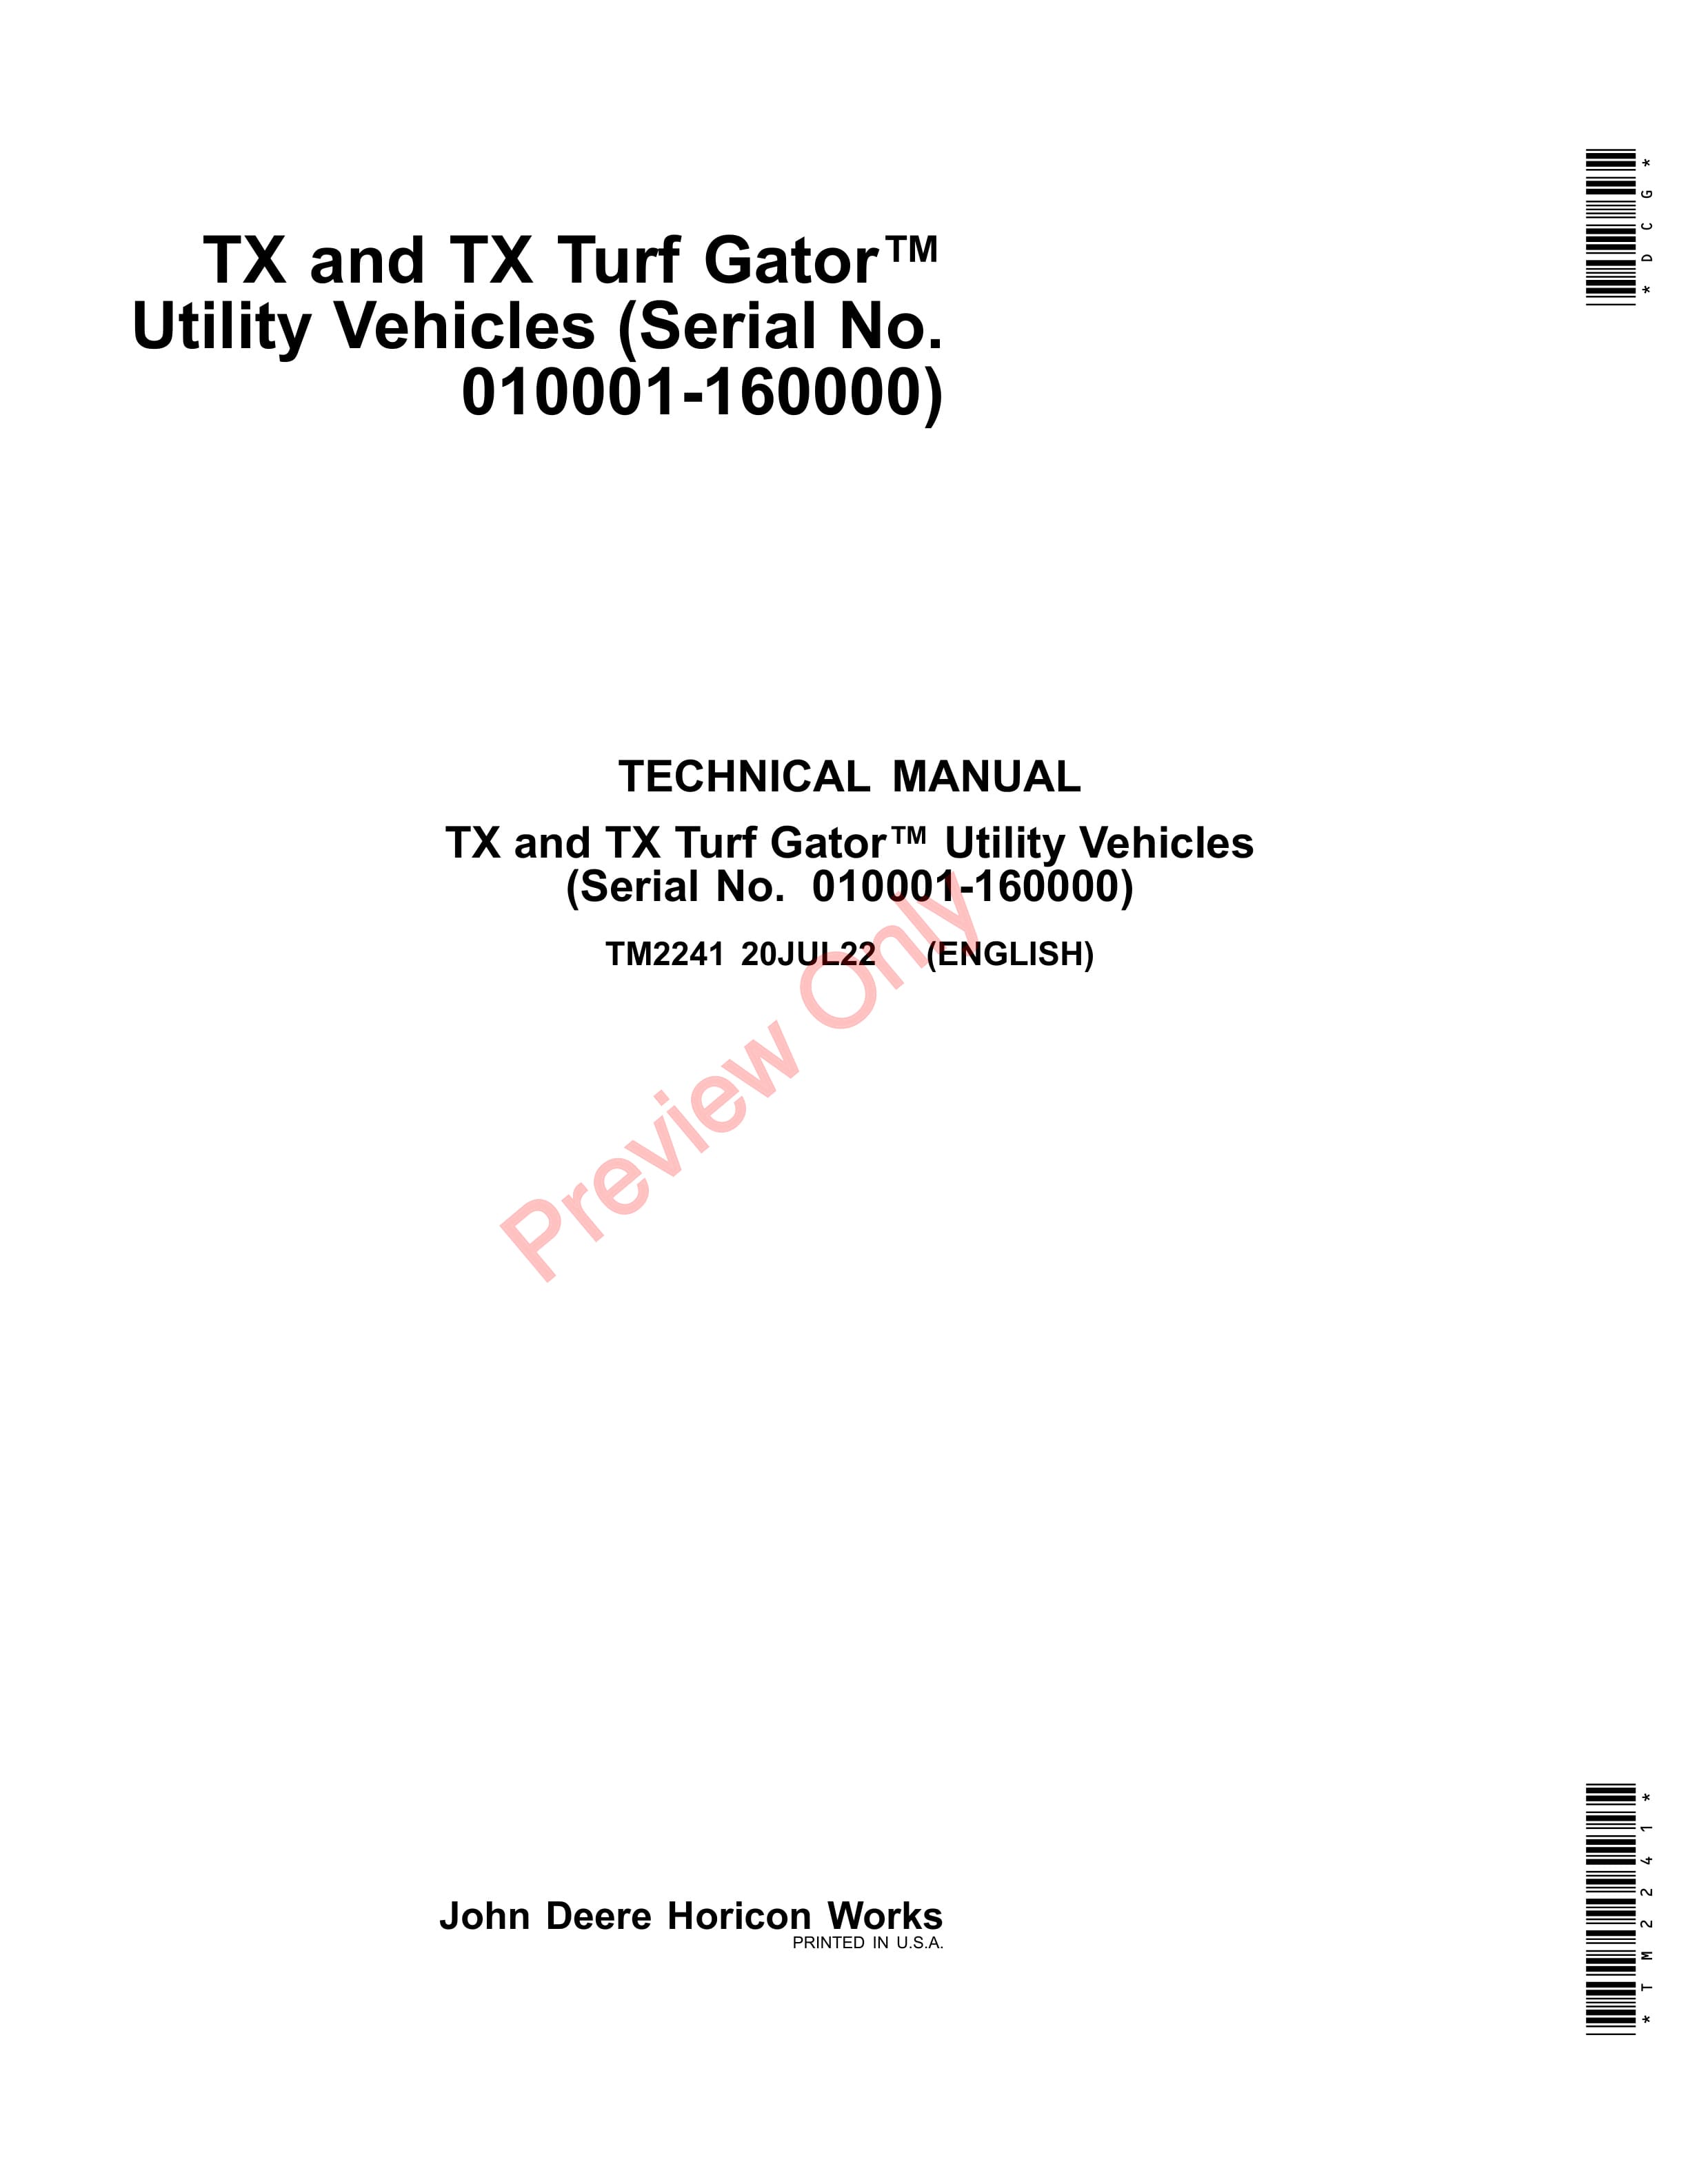 John Deere TX and TX Turf Gator Utility Vehicles 010001 160000 Technical Manual TM2241 20JUL22 1